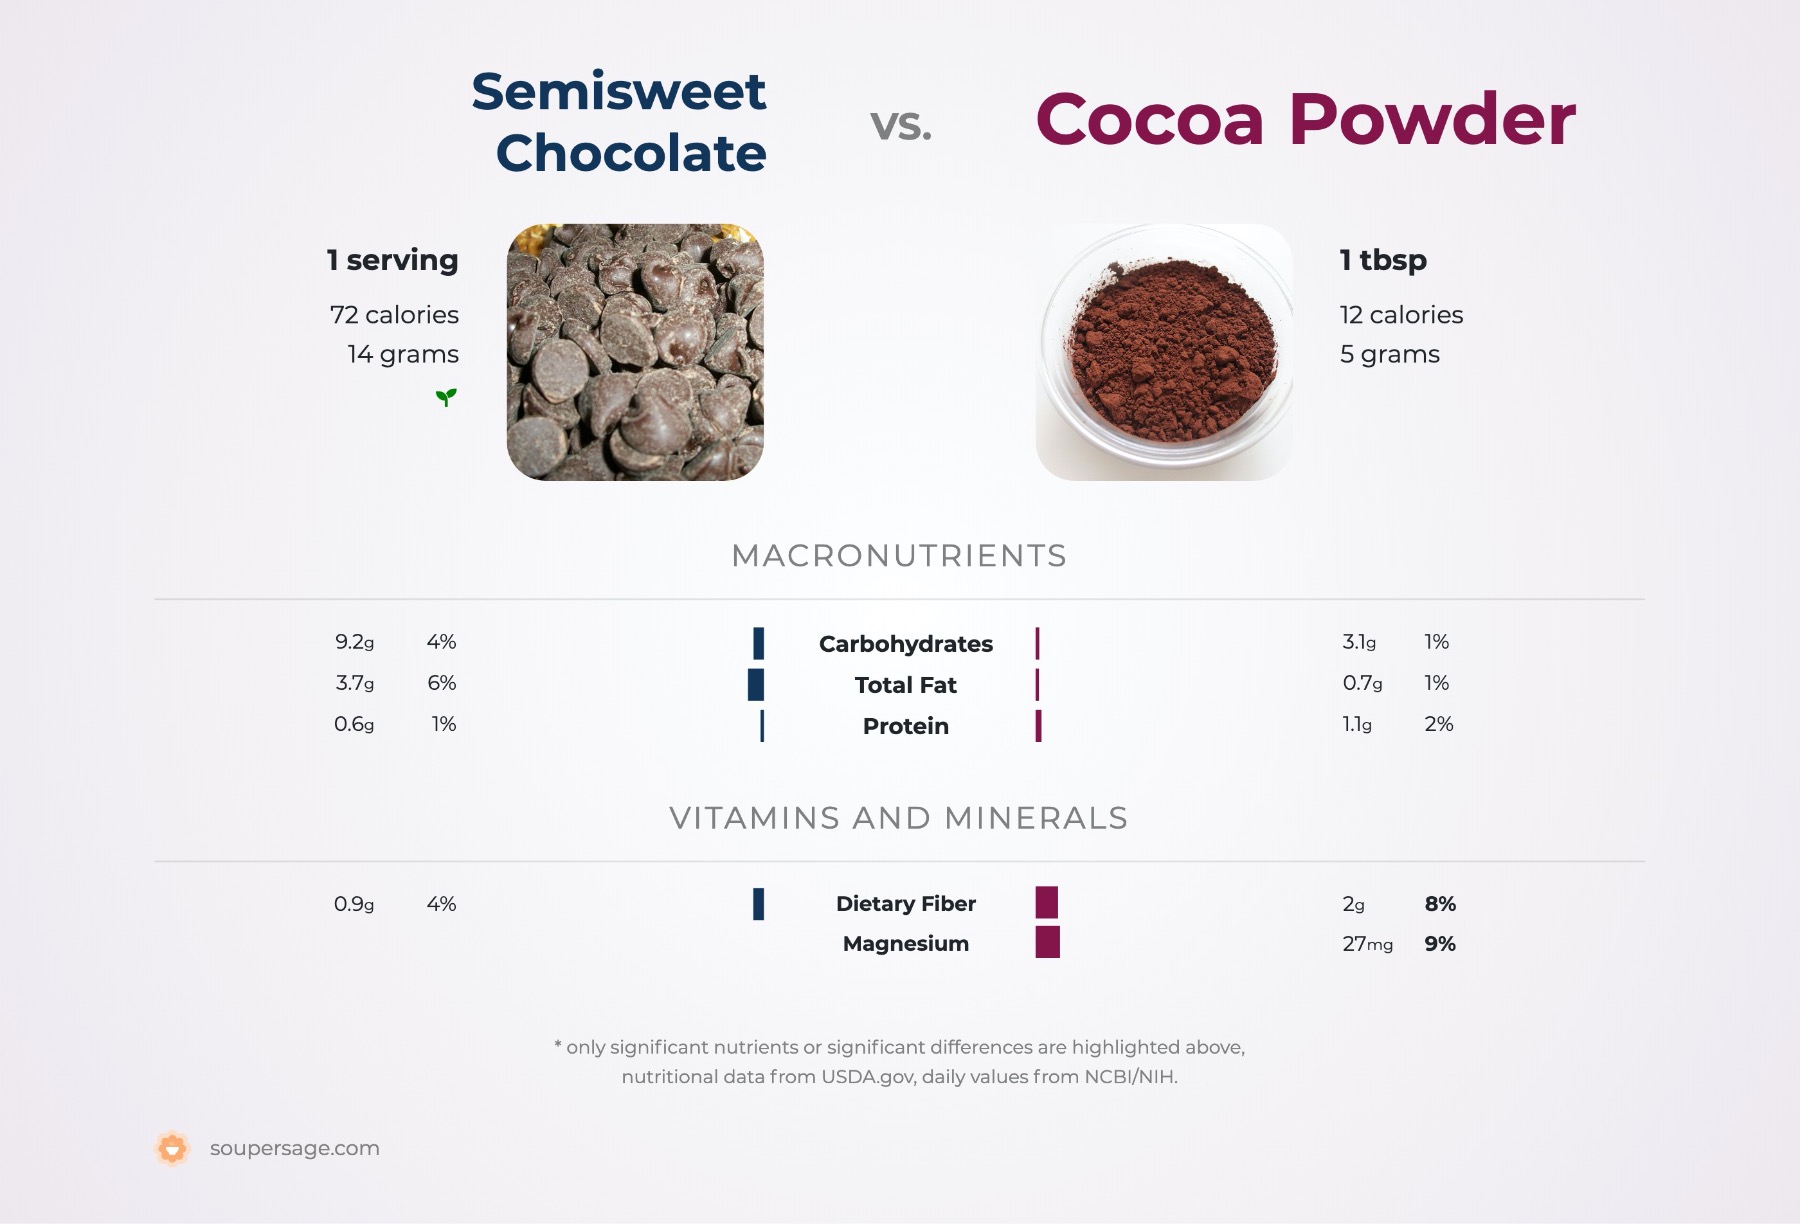 nutrition comparison of semisweet chocolate vs. cocoa powder